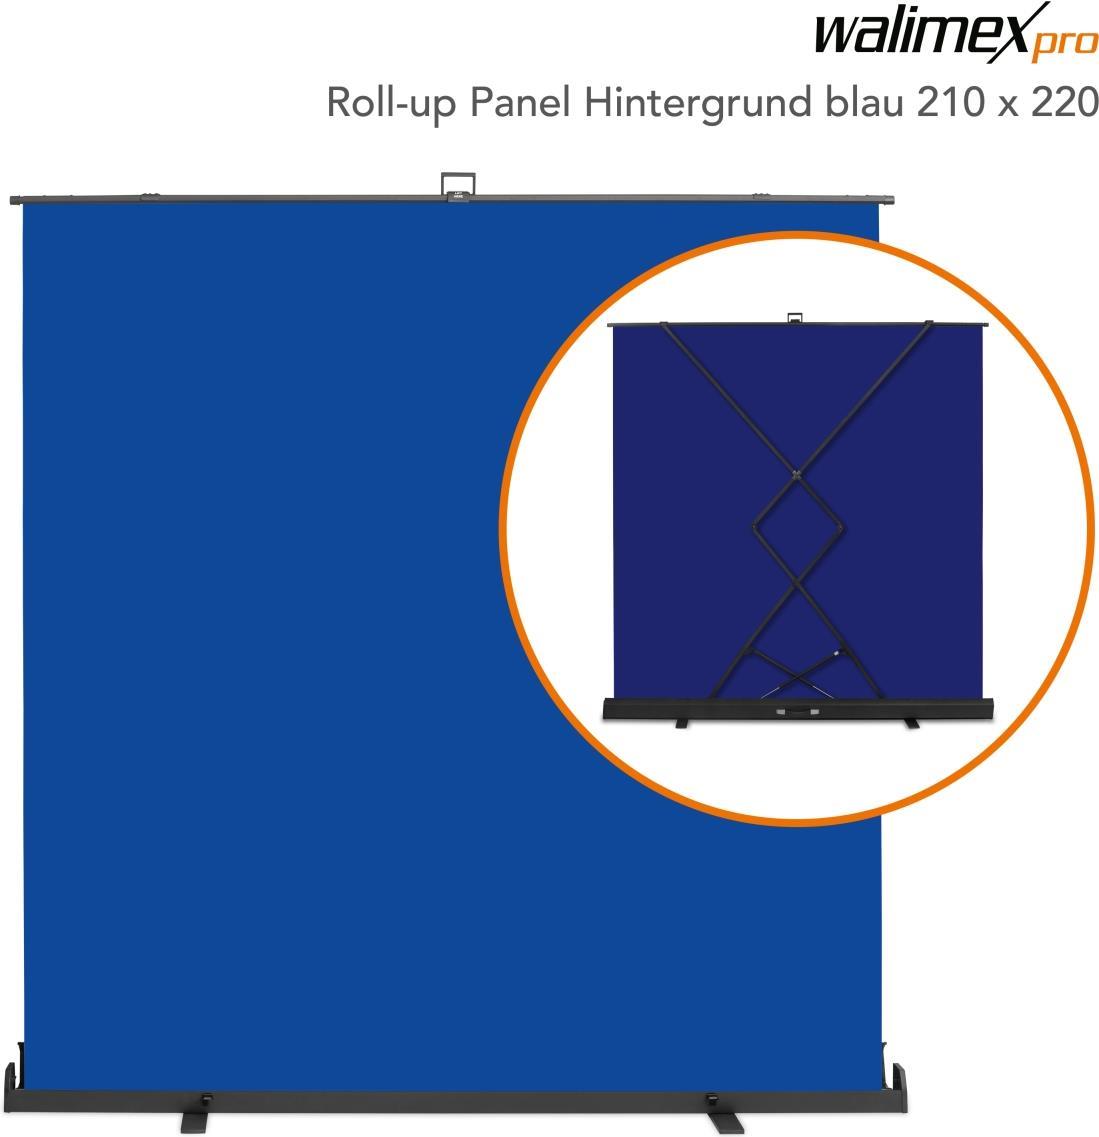 WALSER walimex pro Roll-up Panel Hintergrund 210x220cm blau (23213)